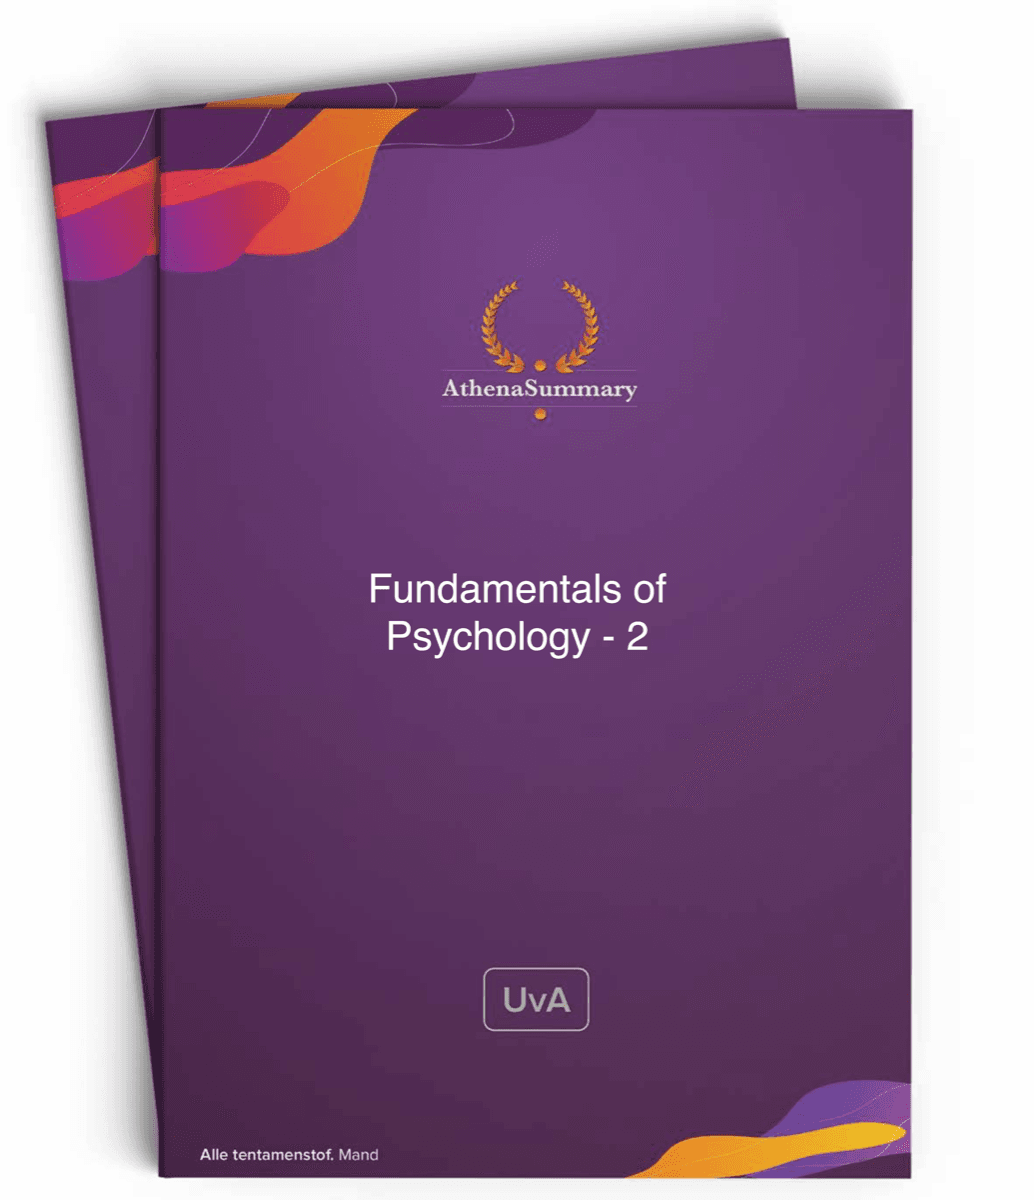 Literature Summary: Fundamentals of Psychology - 2